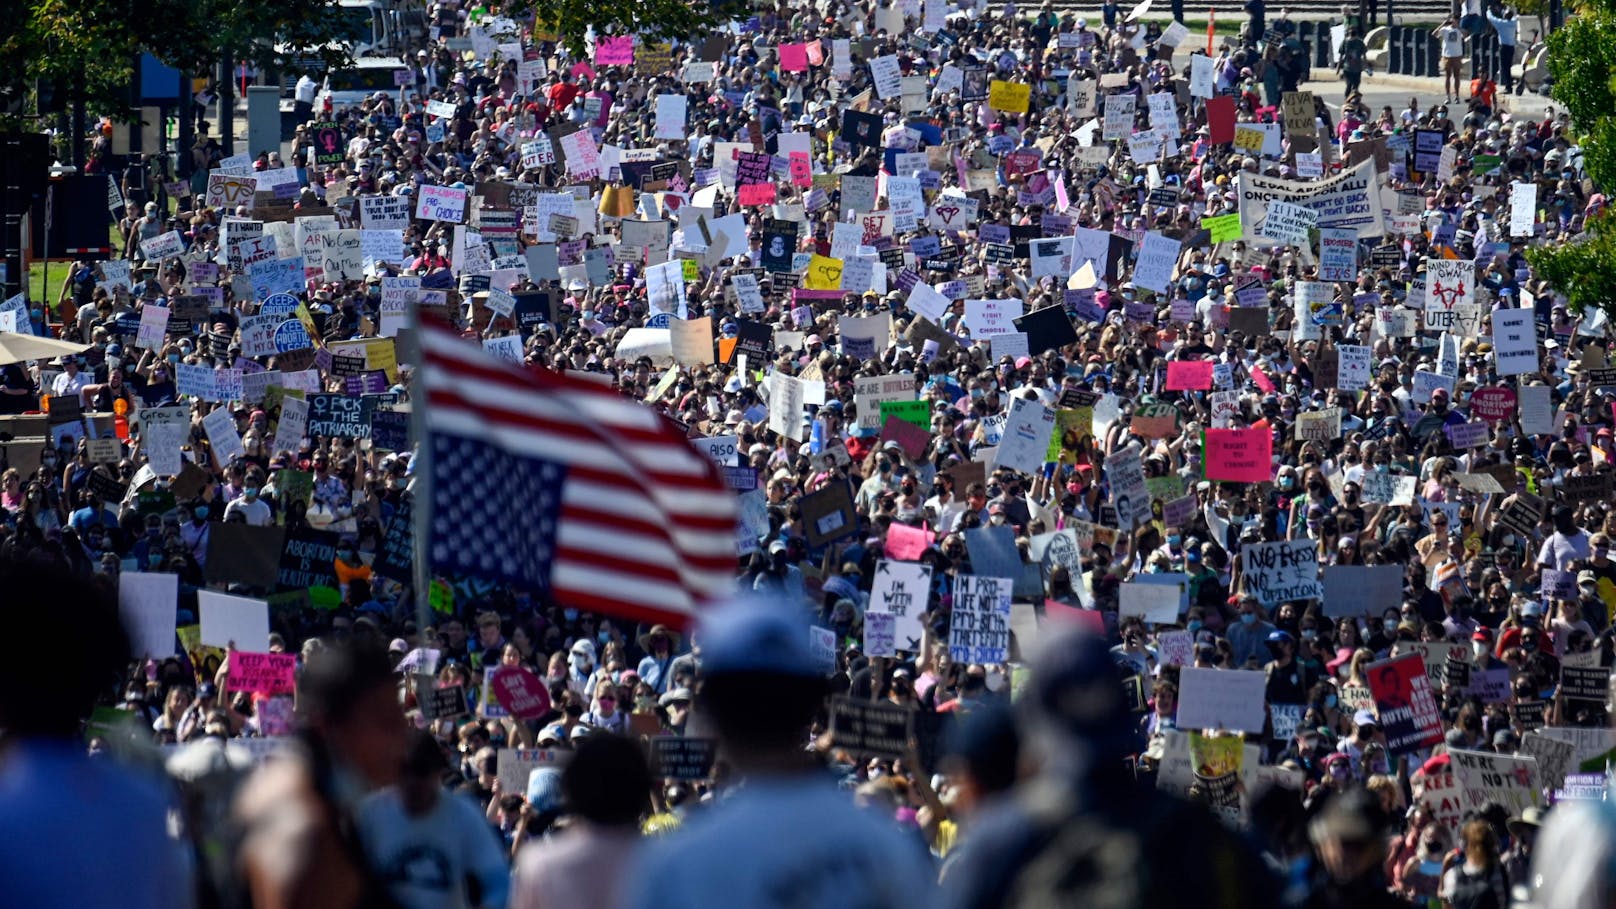 Demonstration in Washington